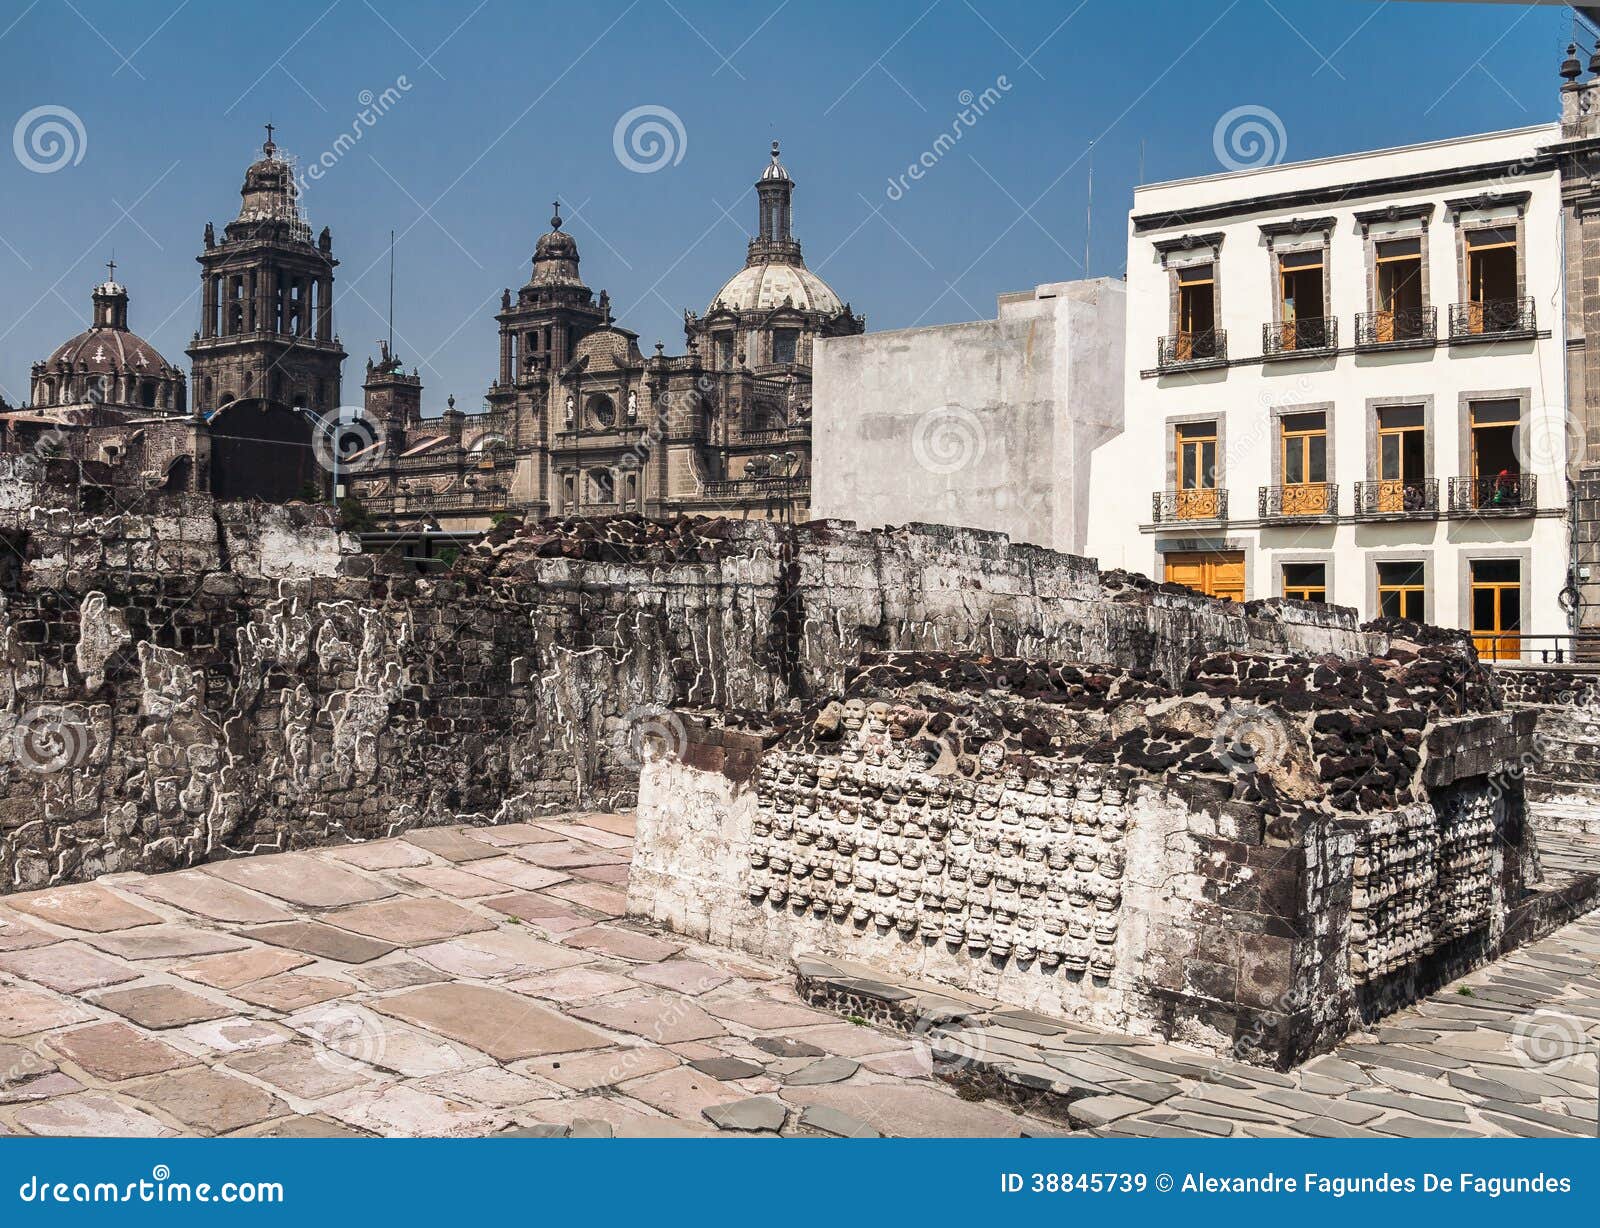 templo mayor mexico city cathedral